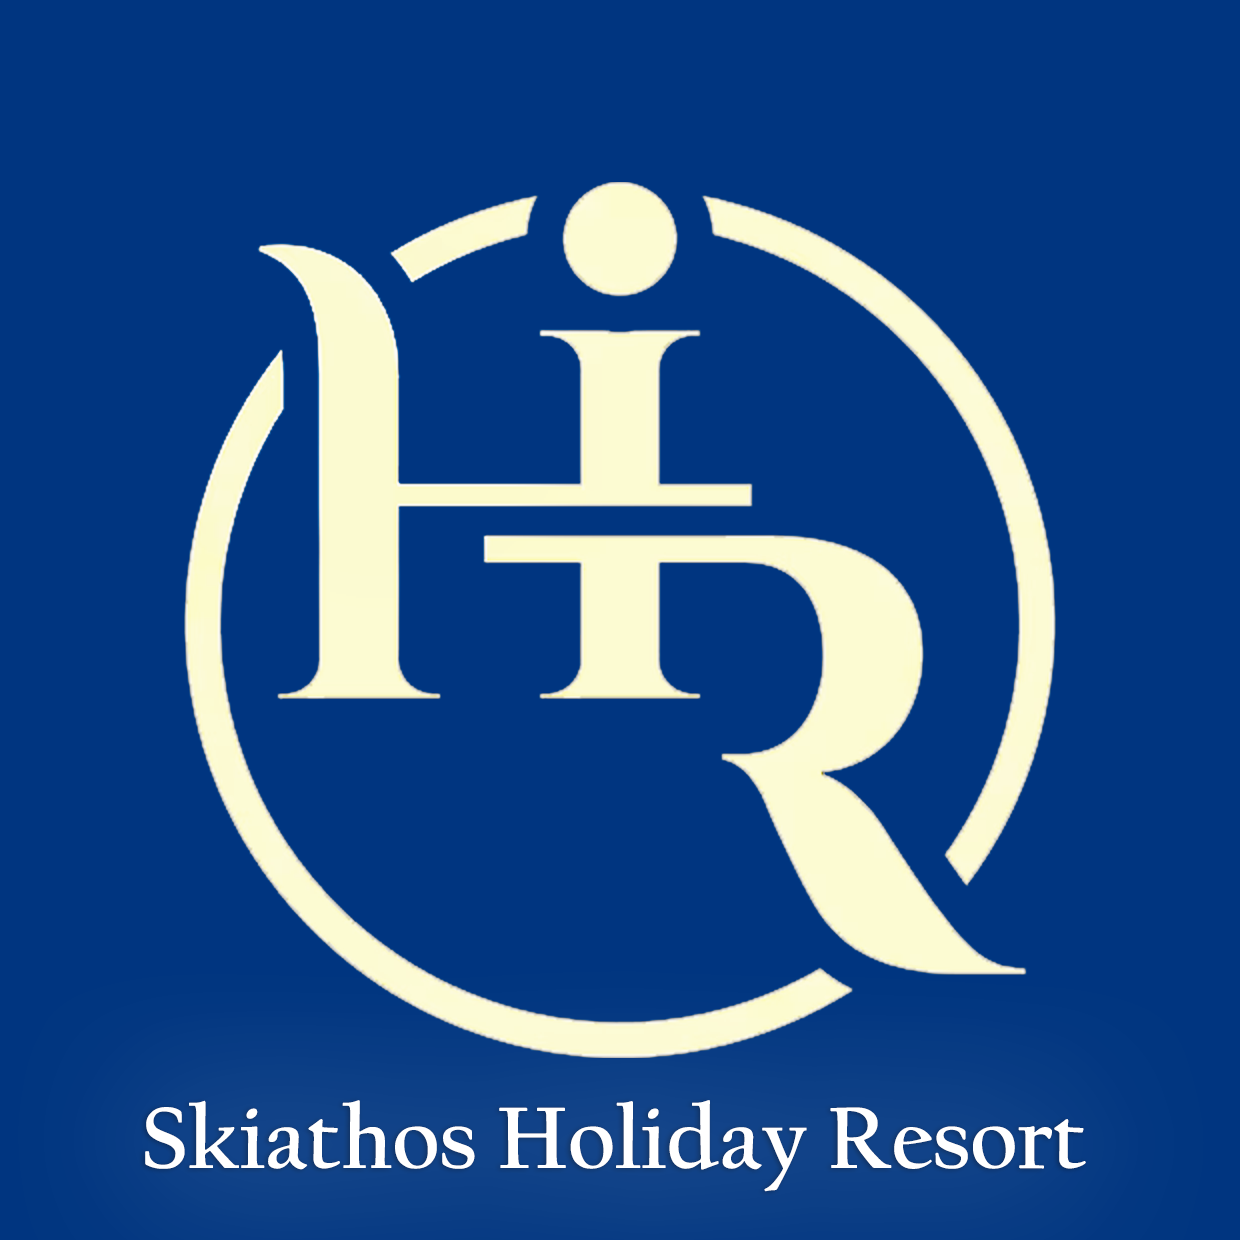 Skiathos Holiday Resort | About us - Skiathos Holiday Resort